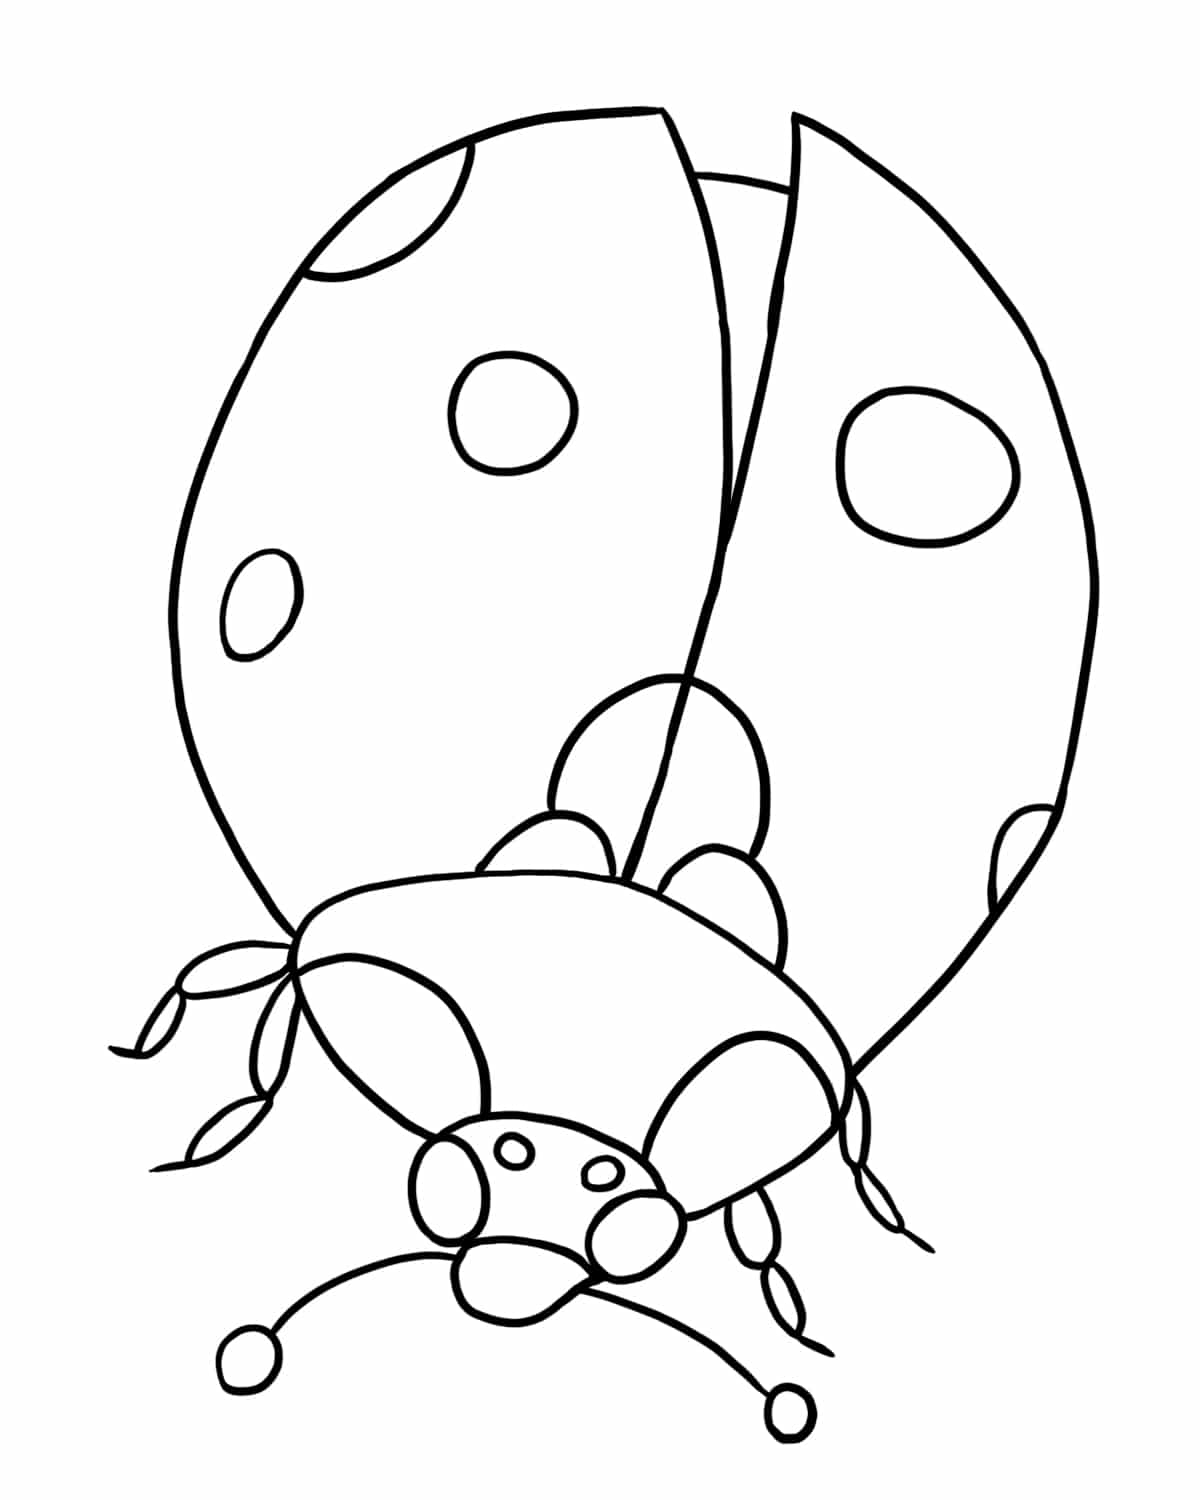 Free Ladybug Coloring Page